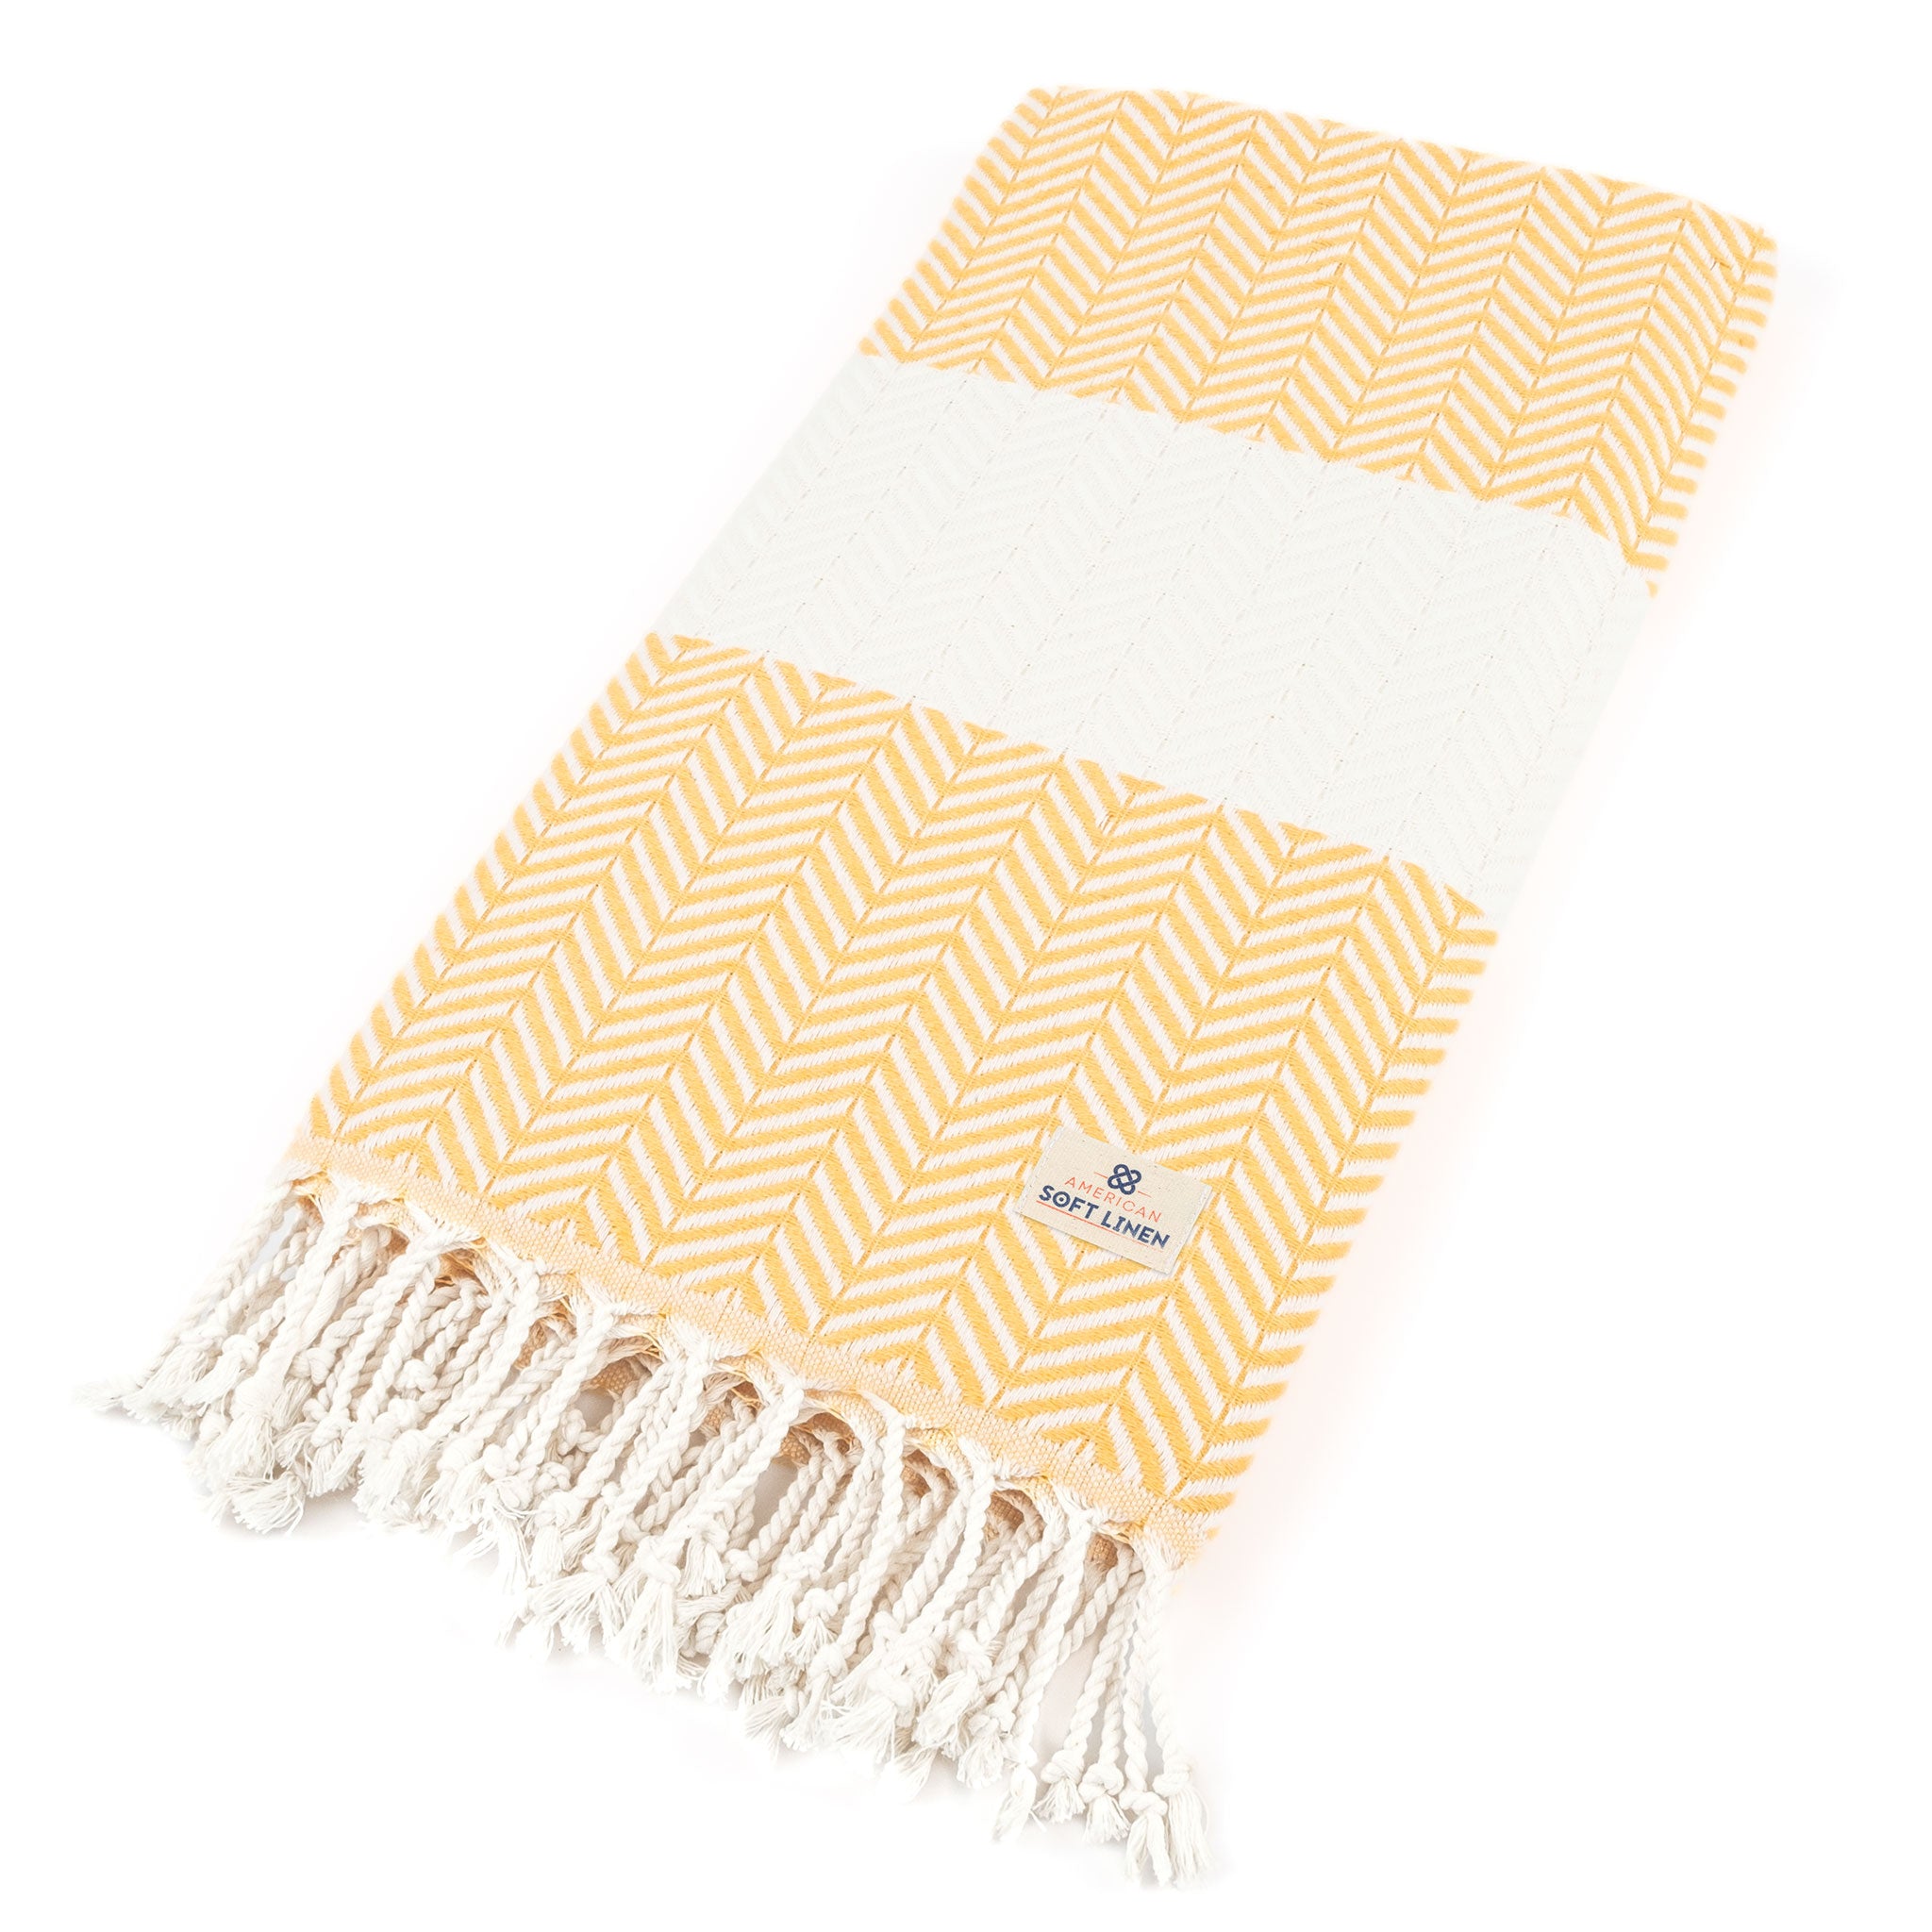 American Soft Linen - 100% Cotton Turkish Peshtemal Towels 40x70 Inches - Yellow - 5